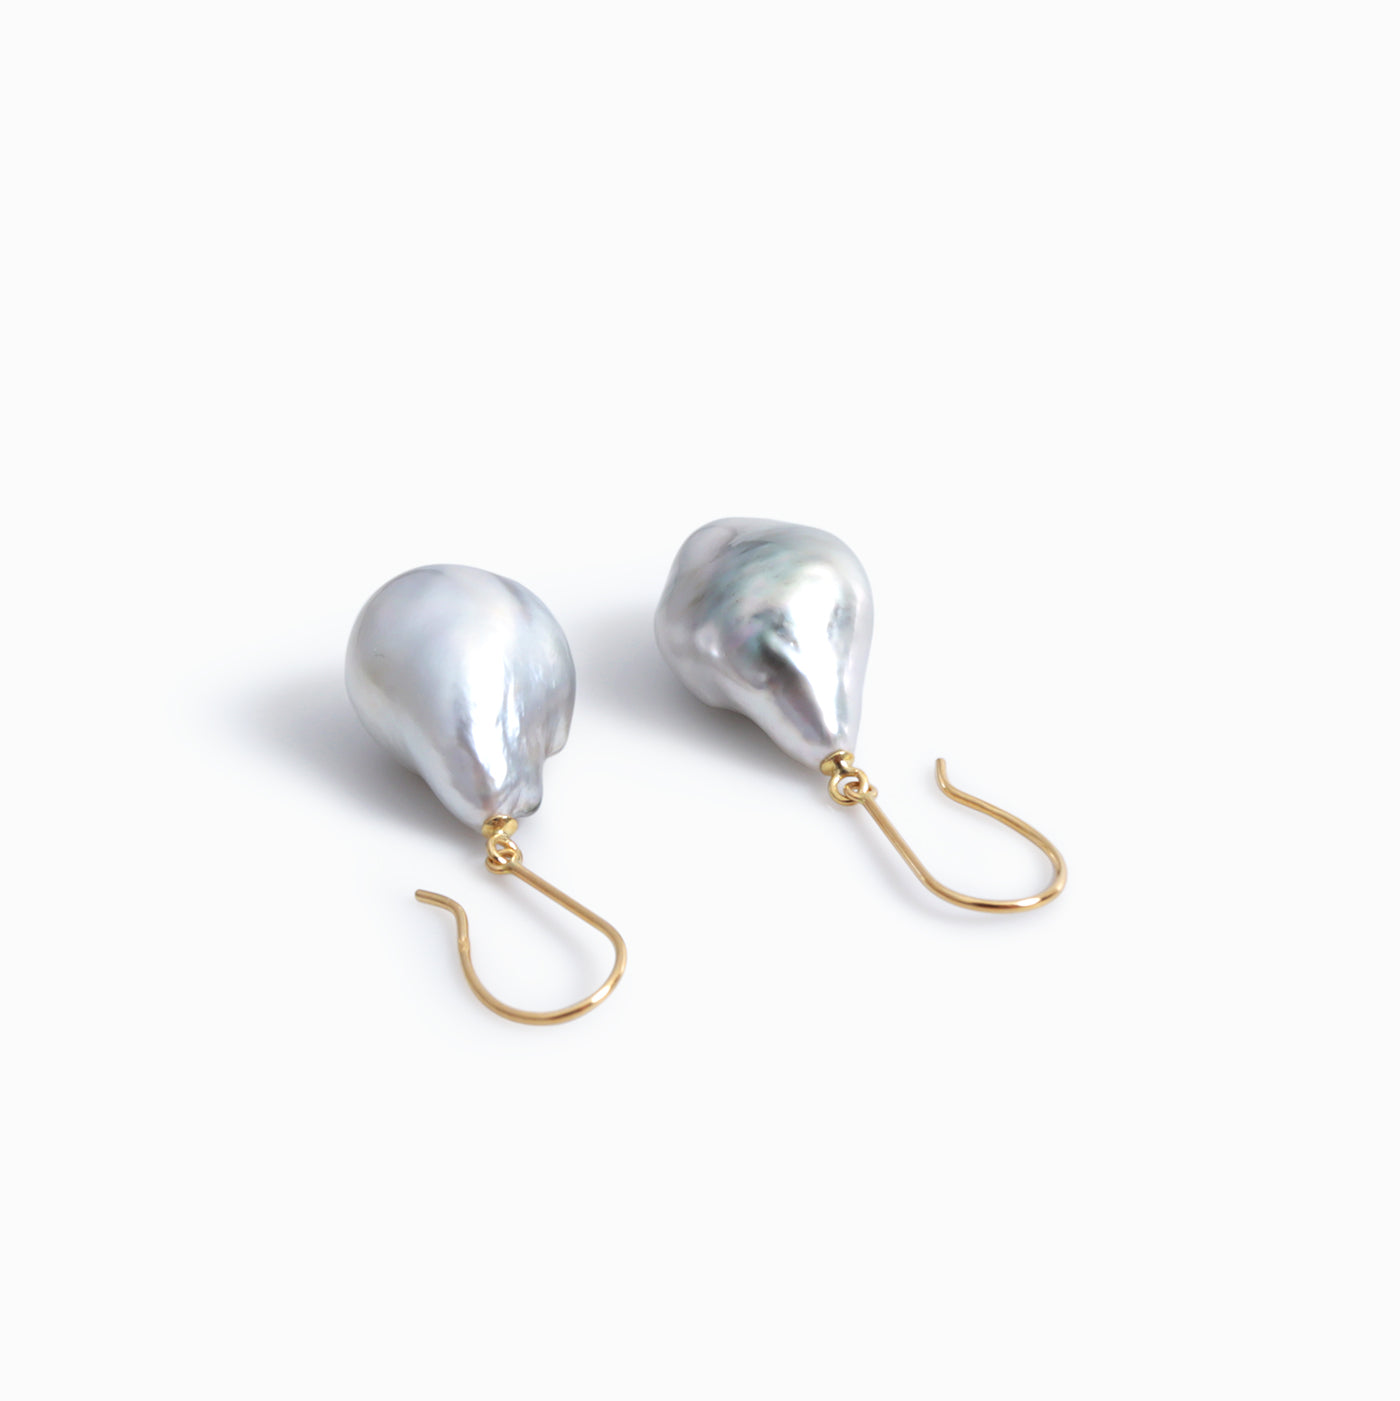 Pearl Hanging Earrings - 12mm 黒蝶ケシパール